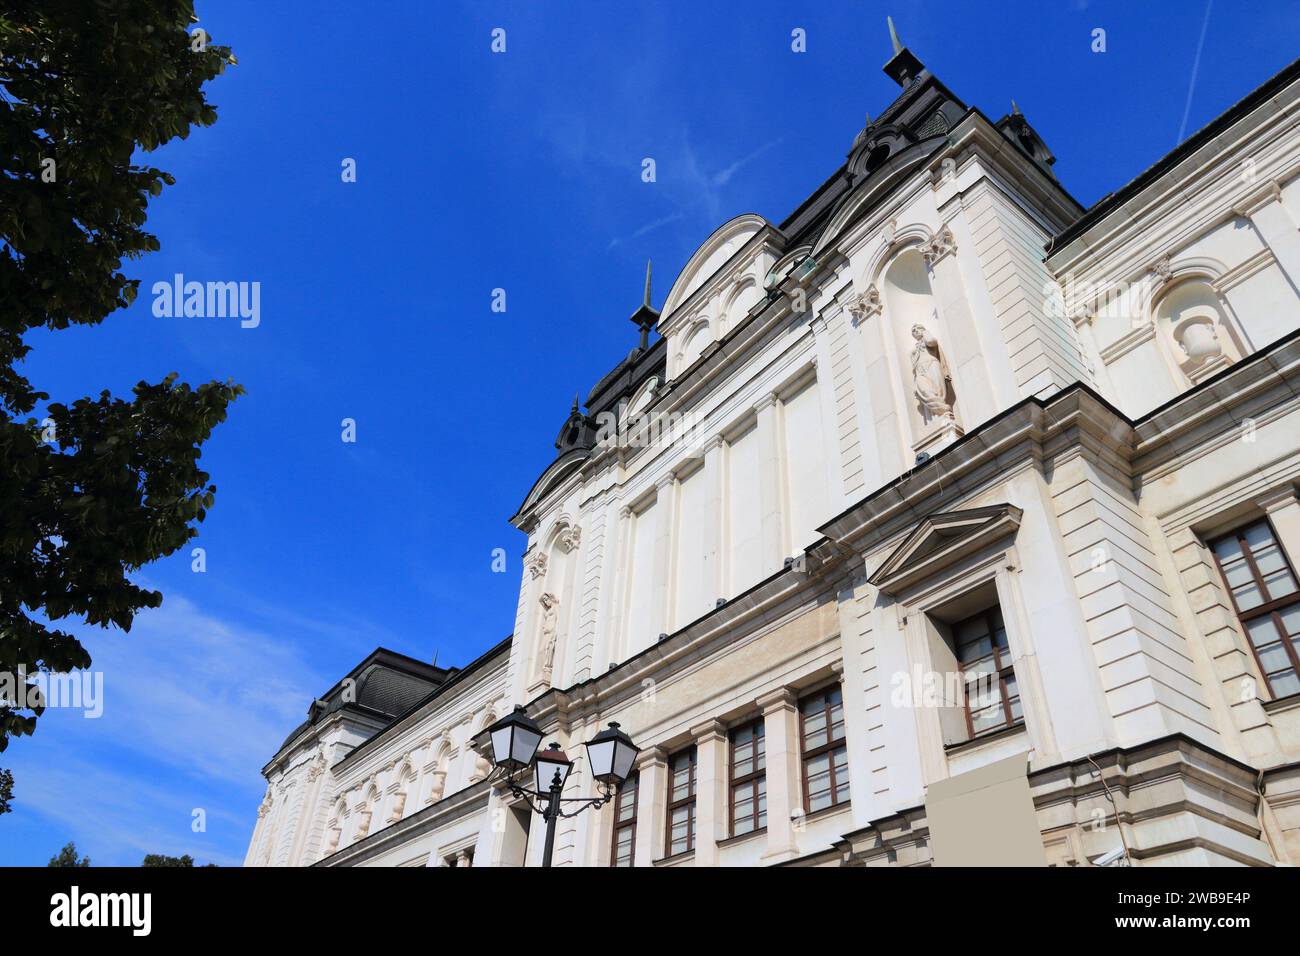 Sofia landmark, Bulgaria - National Gallery for Foreign Art museum building. Stock Photo